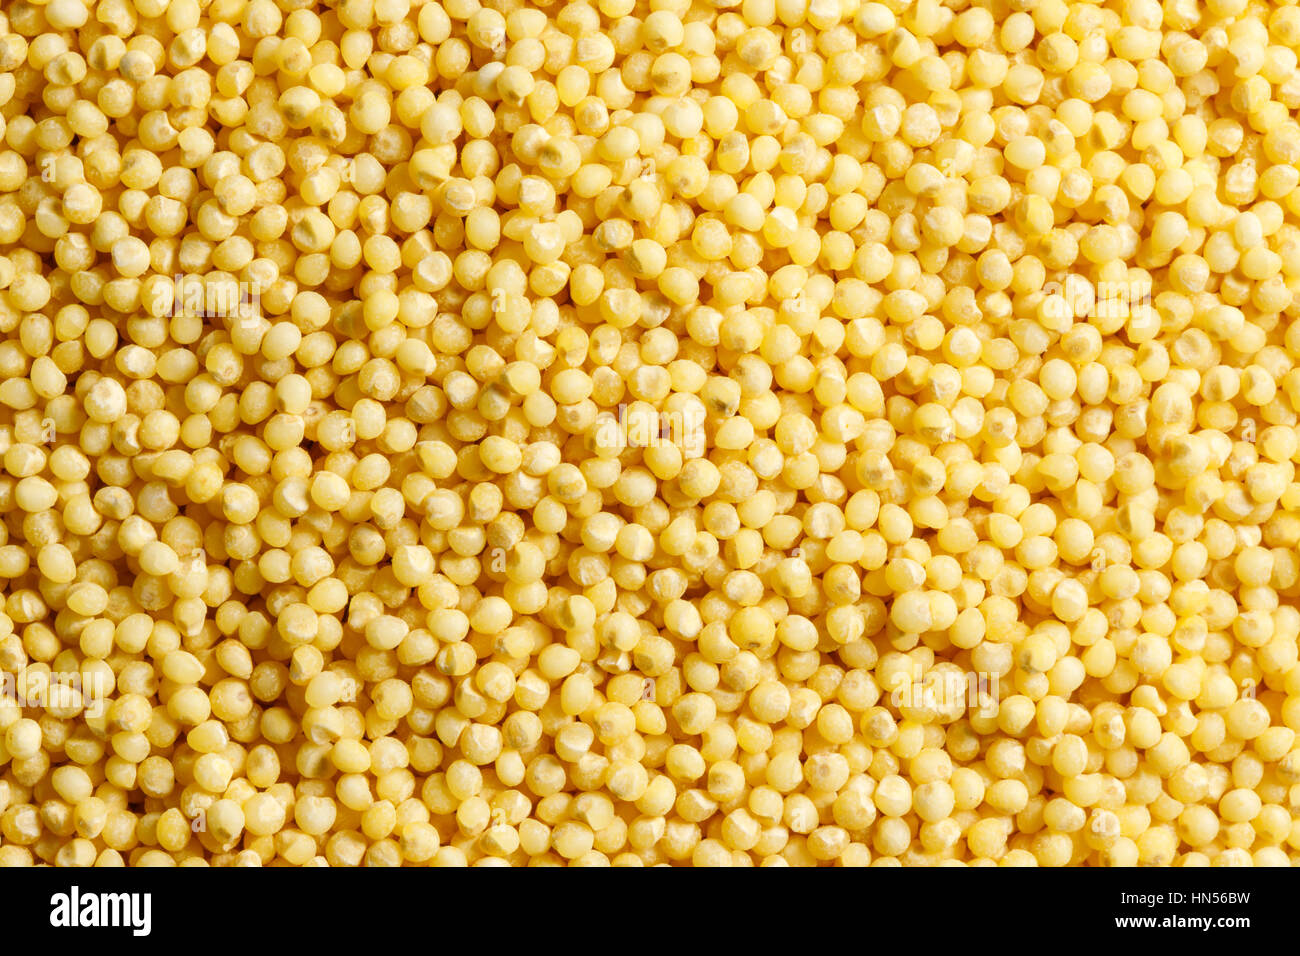 millet raw food ingredient texture macro close up detailed Stock Photo